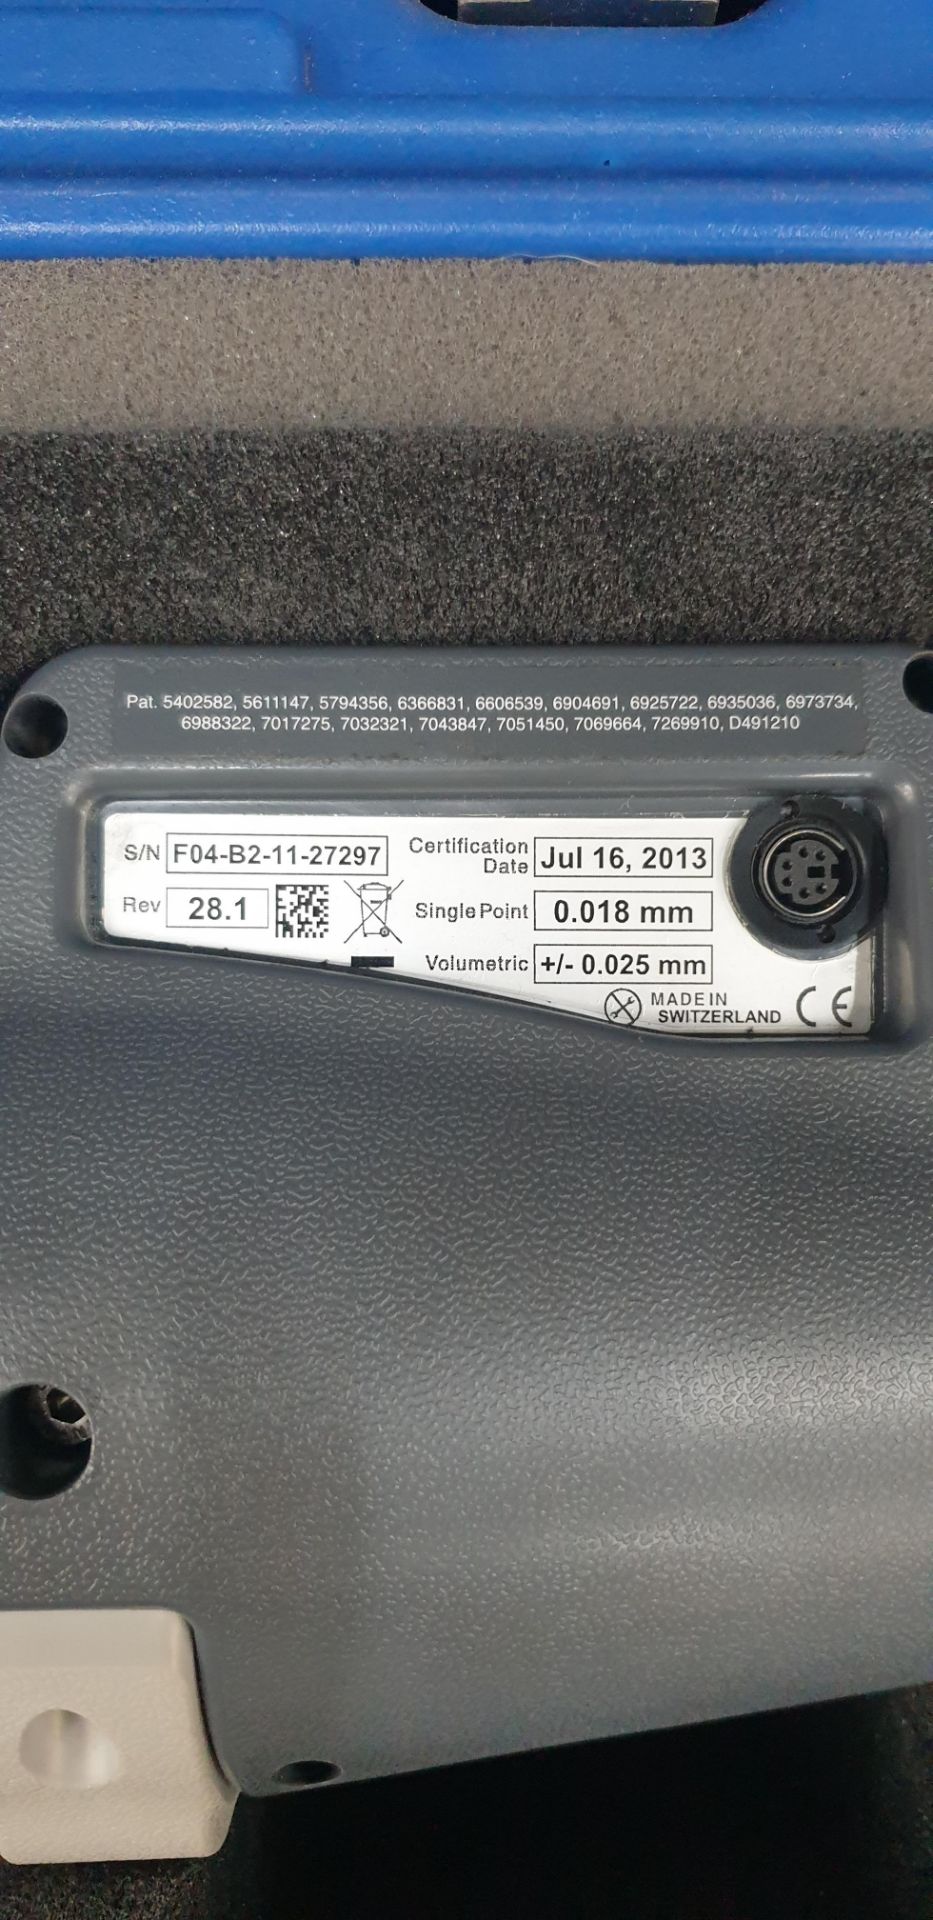 2011 4ft Faro arm Bluetooth Gage - Image 8 of 9